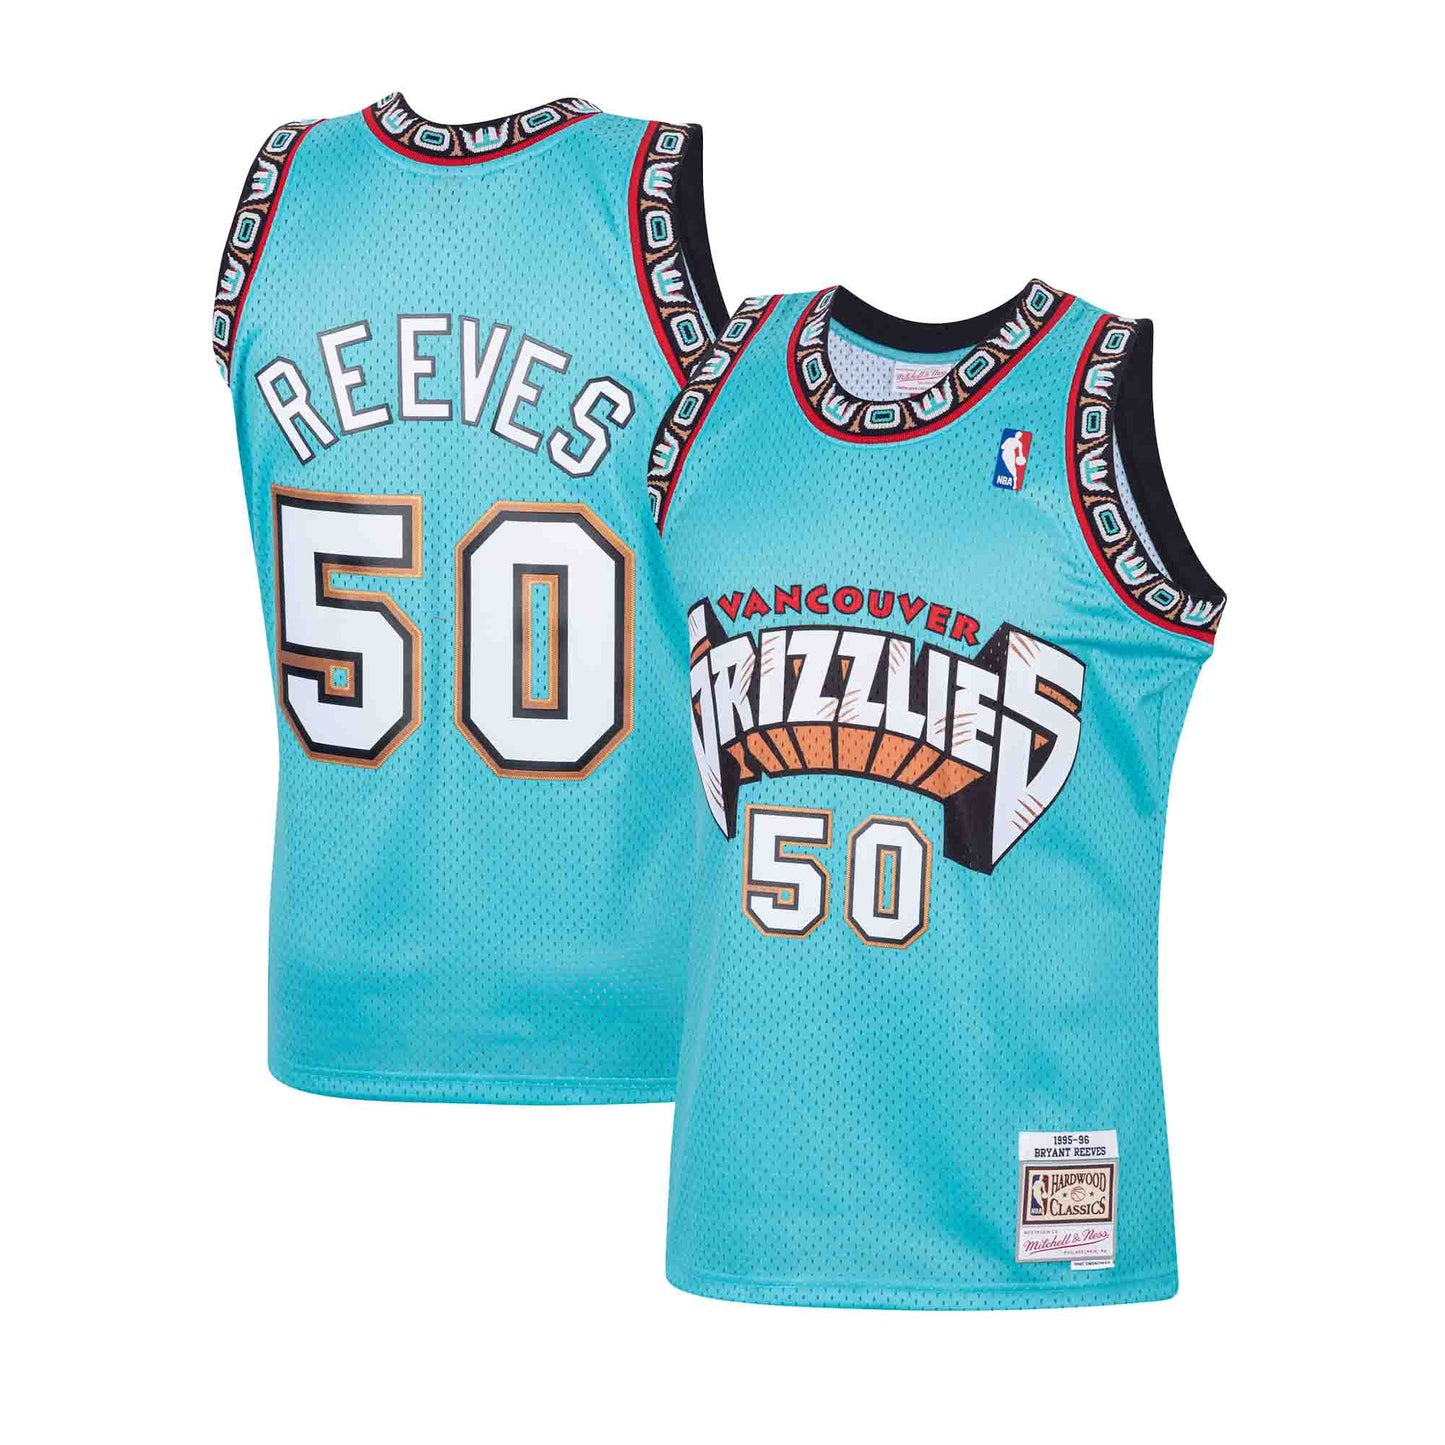 Vancouver Grizzlies Blue NBA Jerseys for sale